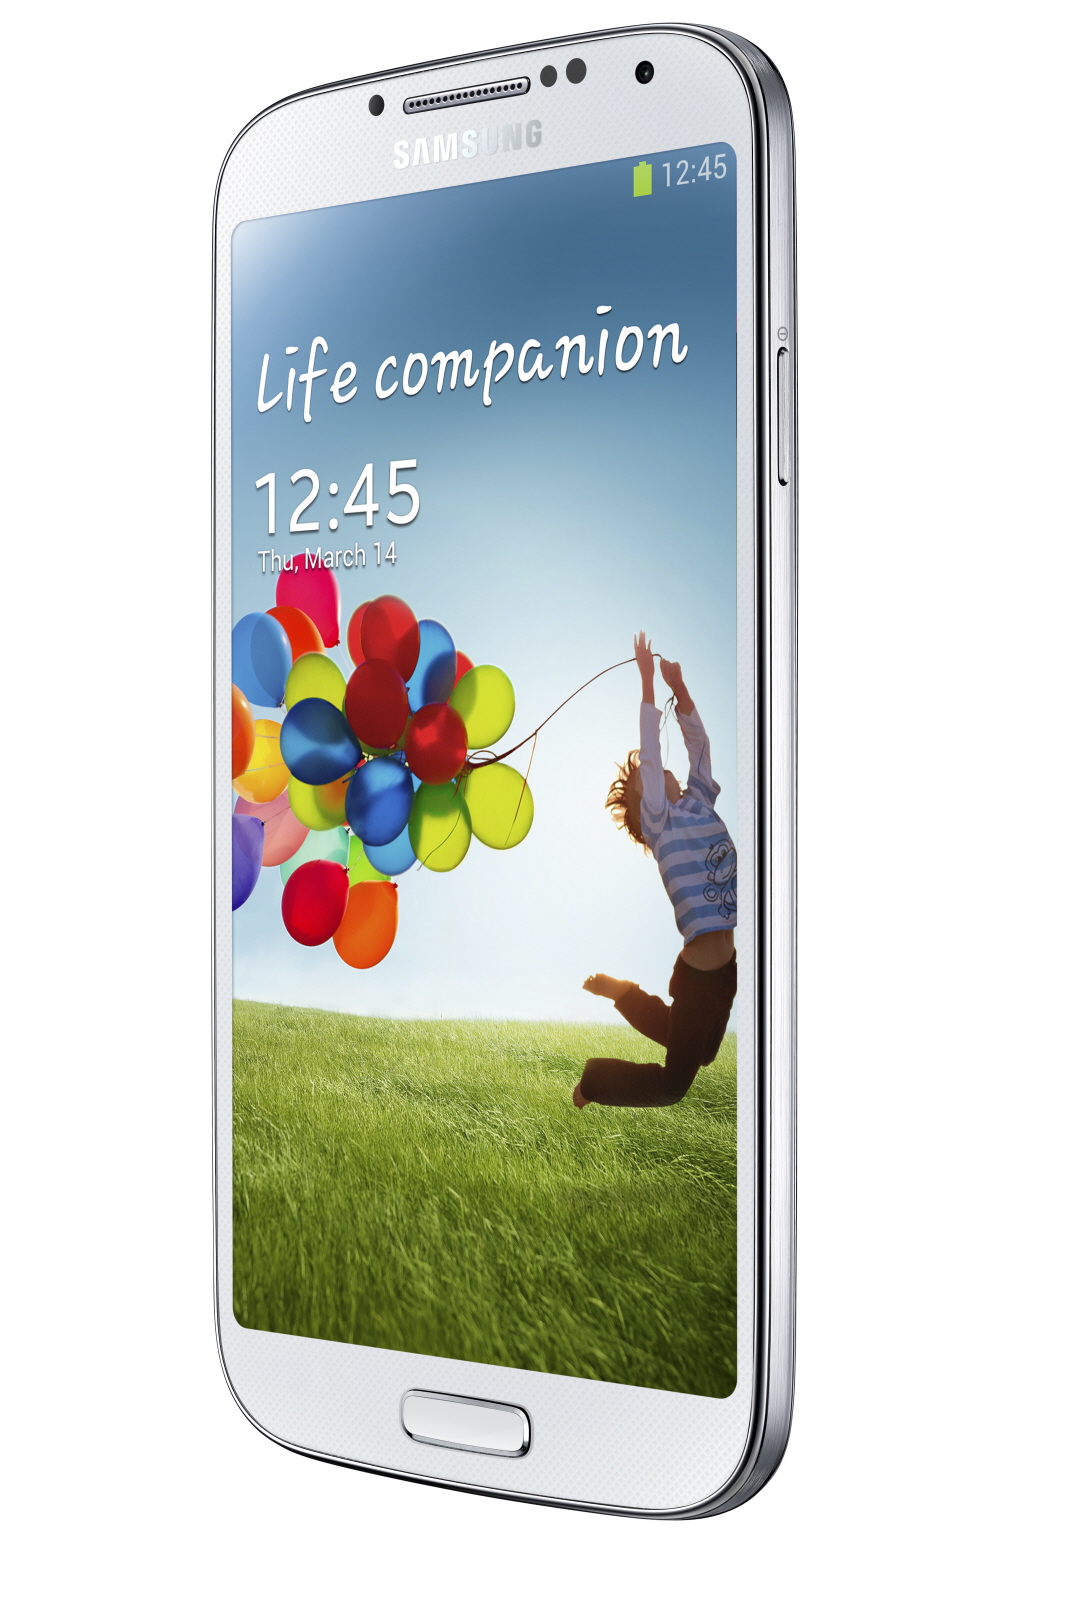 Samsung Galaxy S6: Release Date